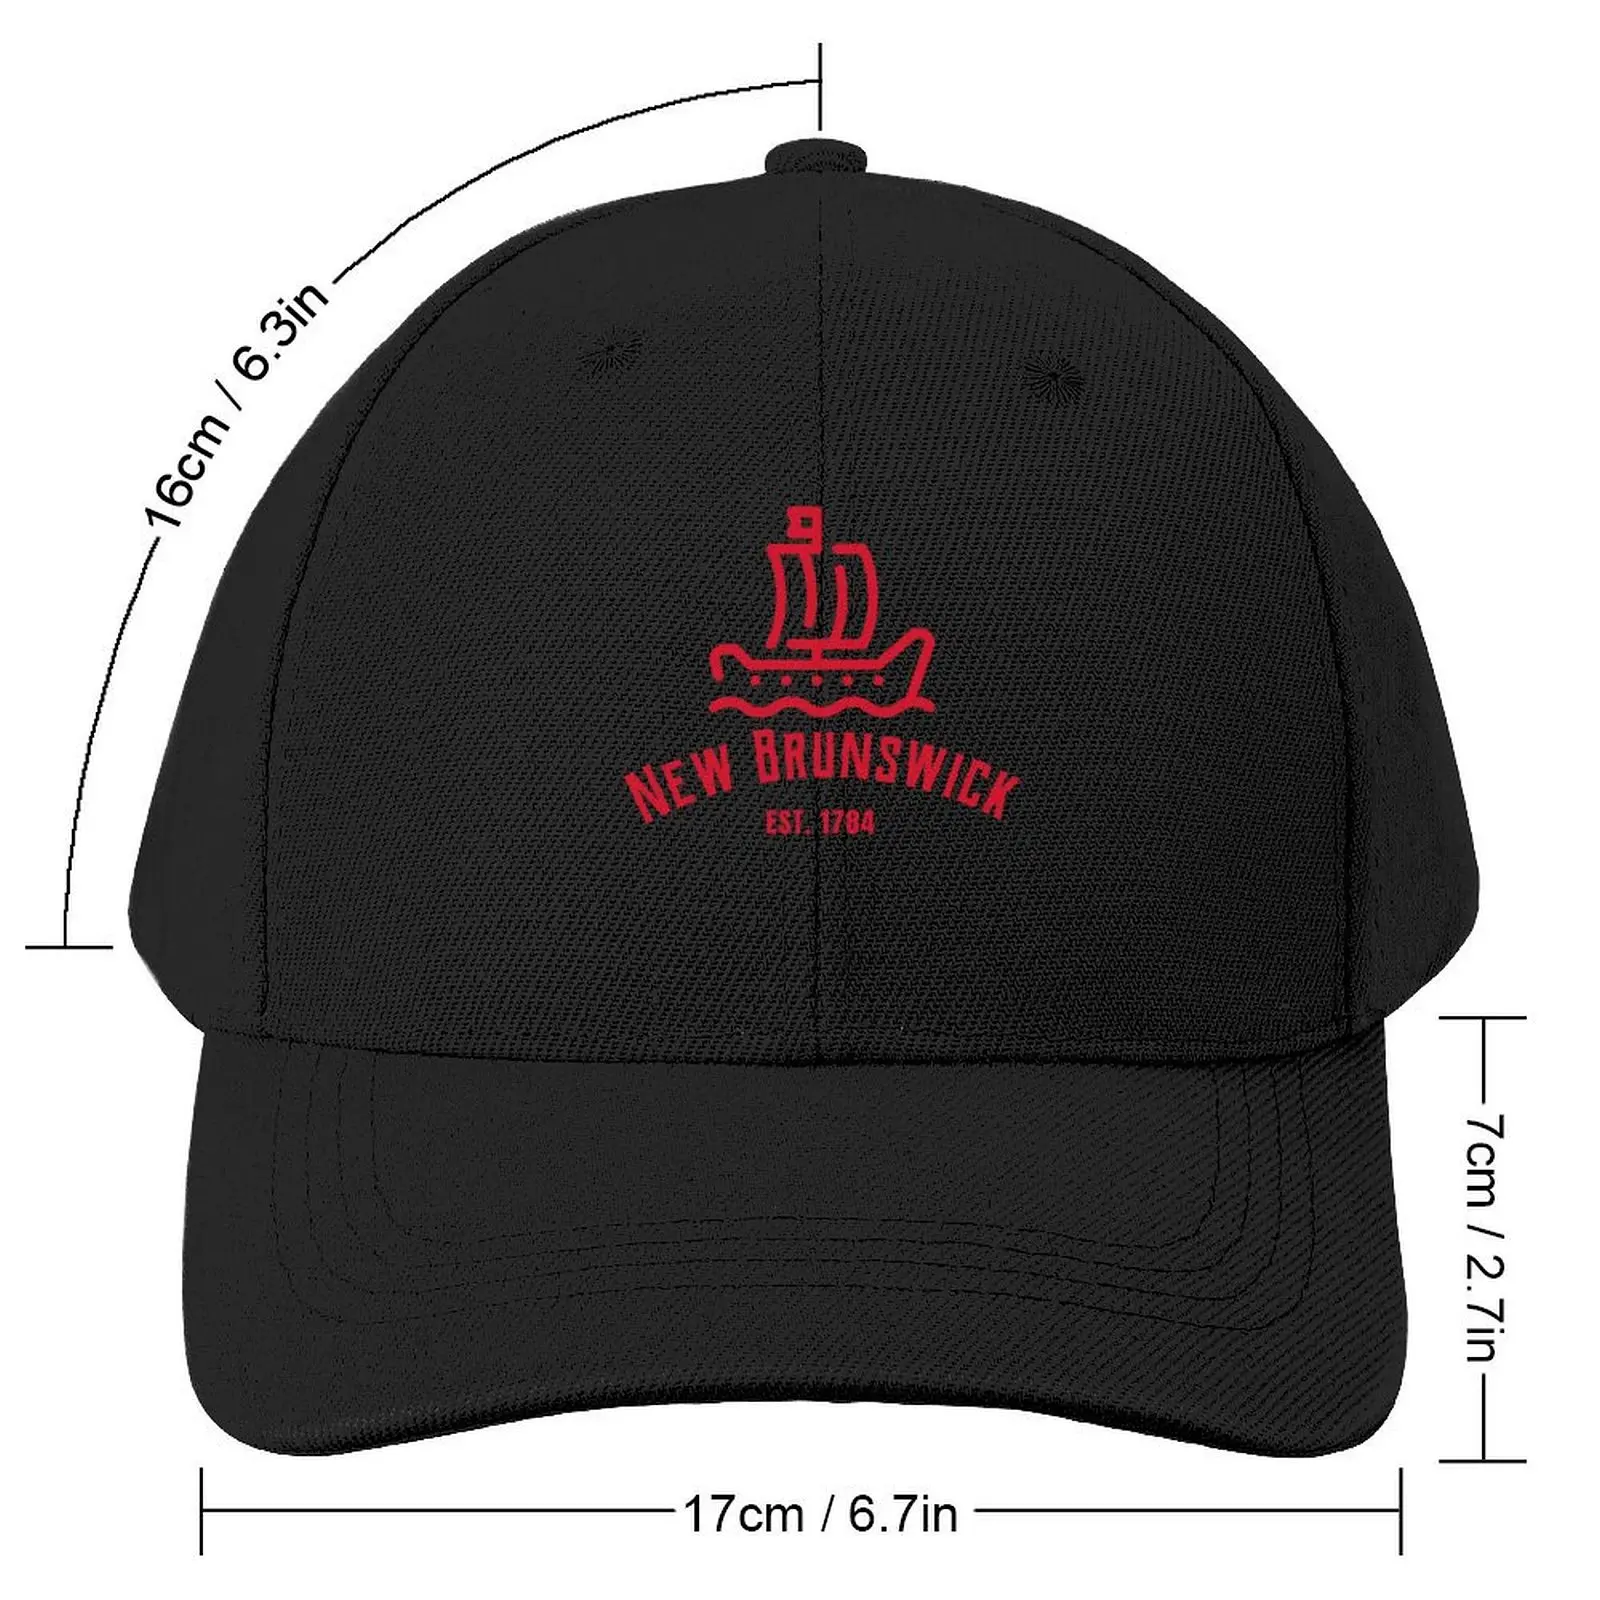 New Brunswick, Canada, est 1784 Baseball Cap Beach Hat Man For The Sun hard hat Elegant Women's Hats Men's